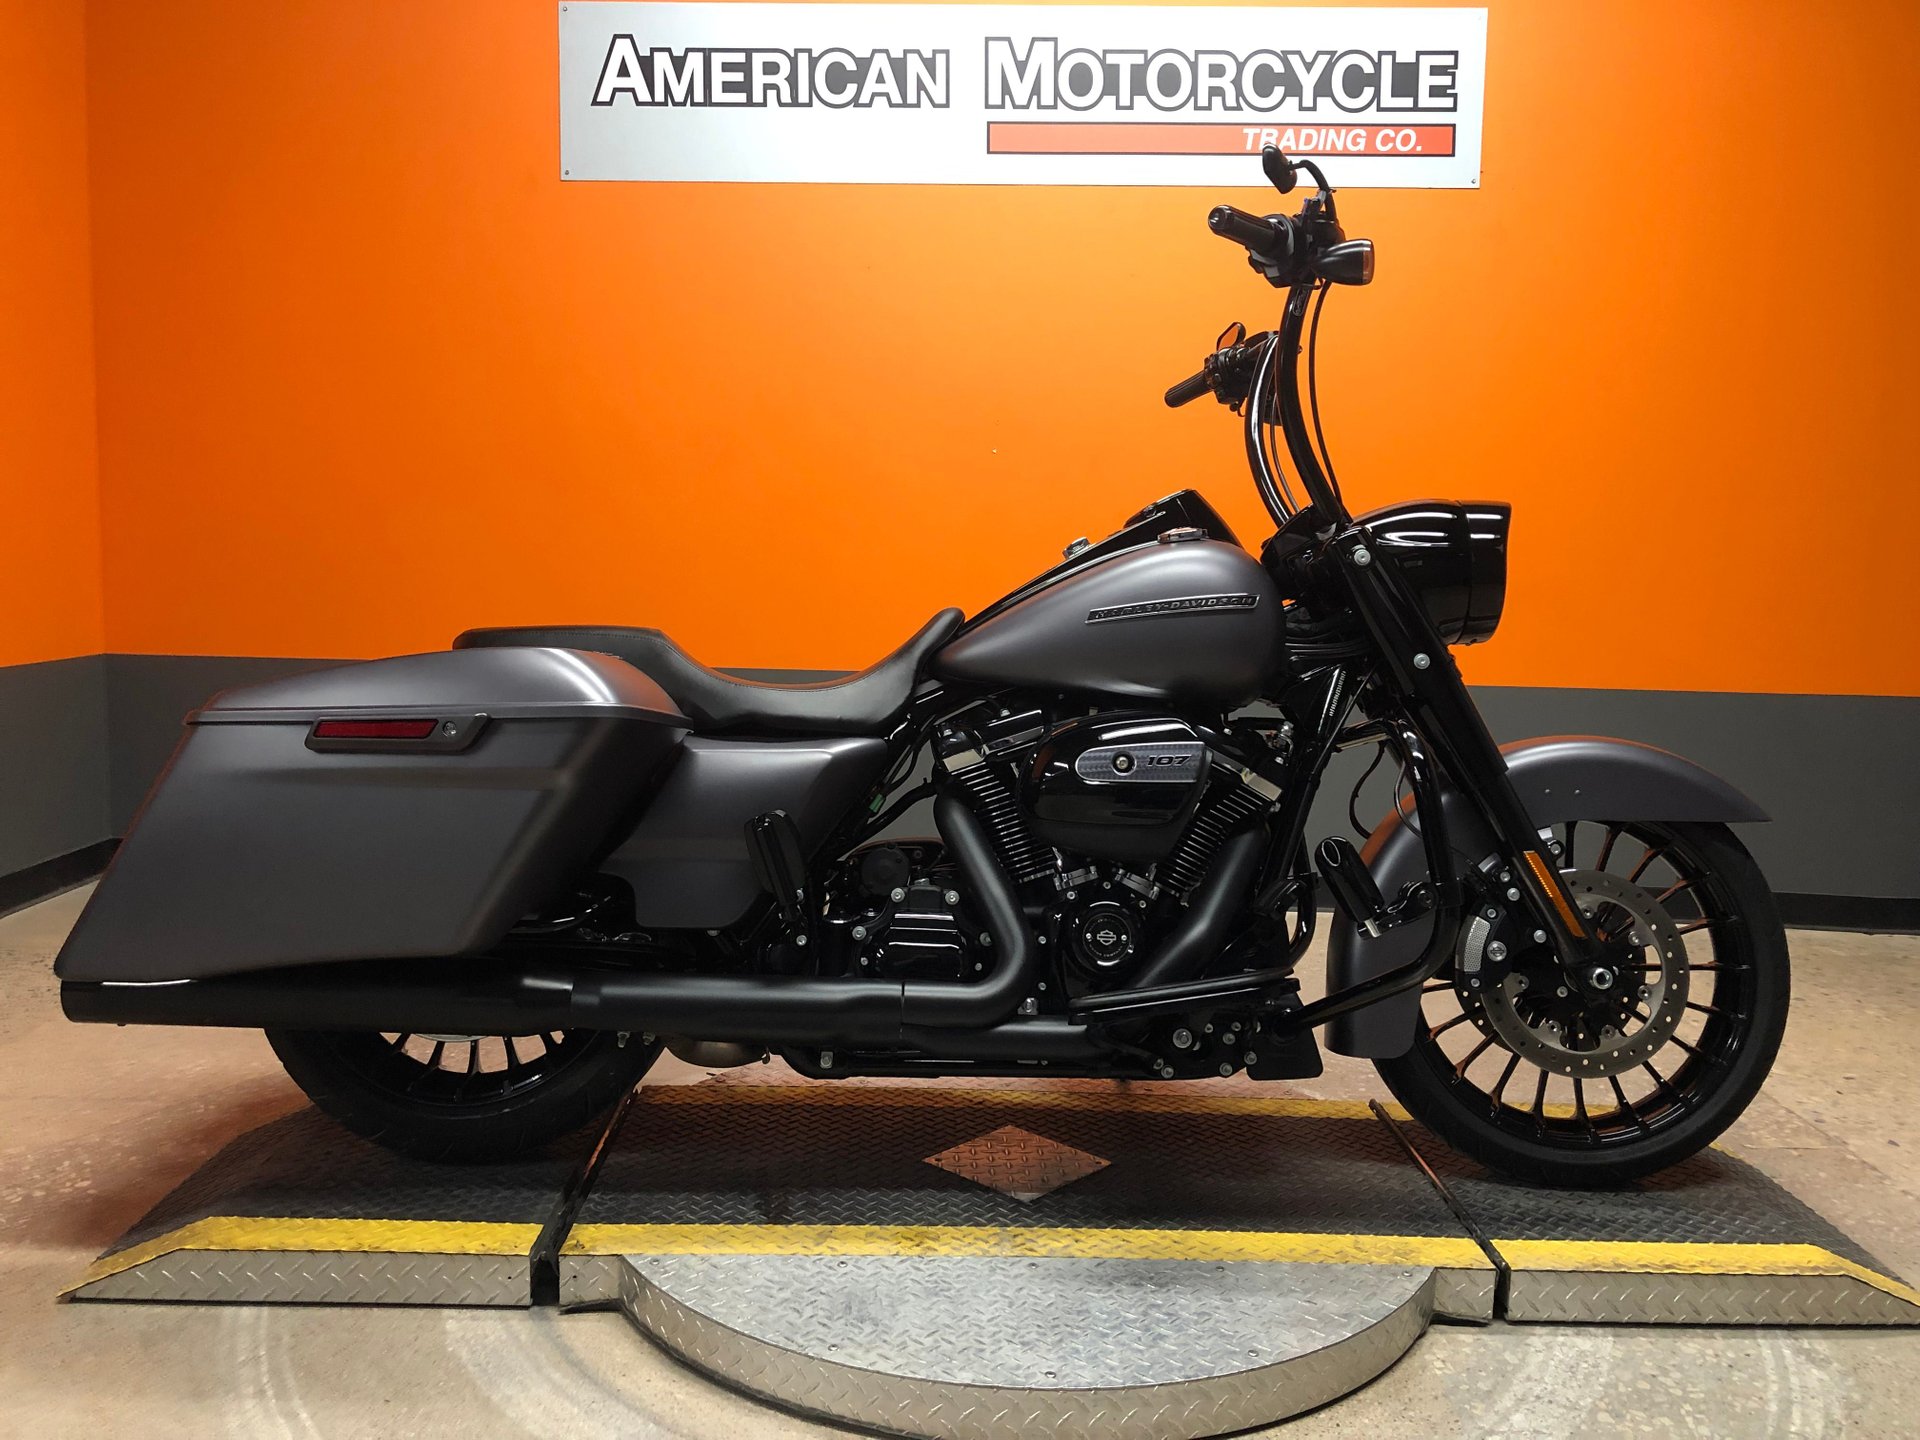 2017 Harley Davidson Road King American Motorcycle Trading Company Used Harley Davidson Motorcycles